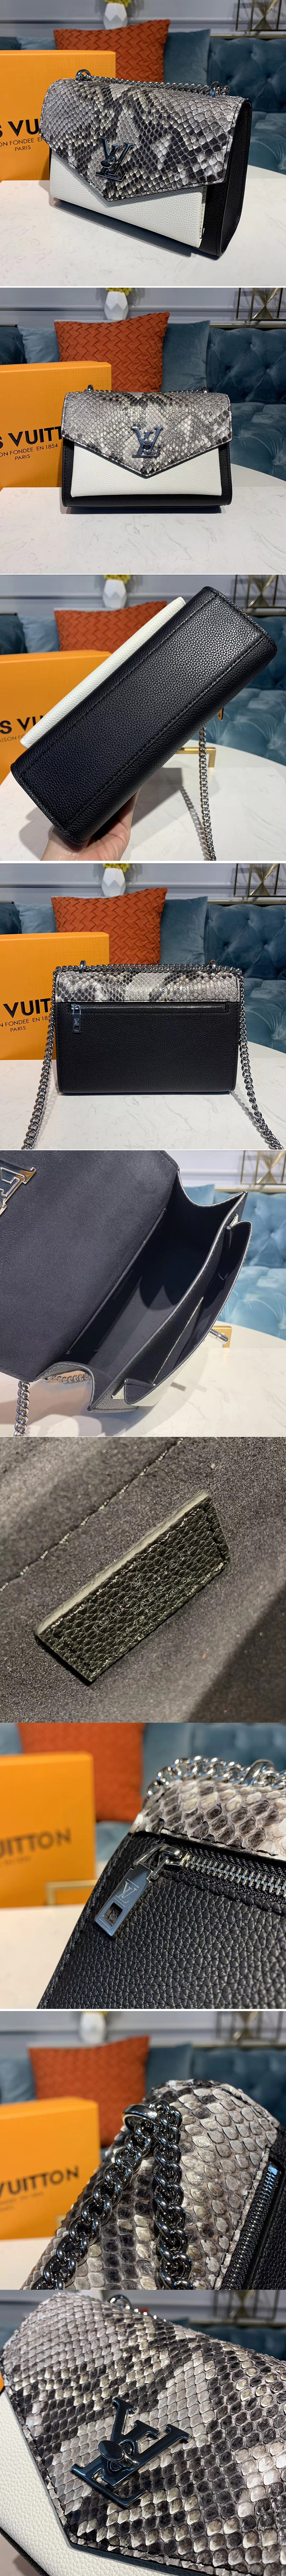 Replica Louis Vuitton N97000 mylockme python skin chain bag size